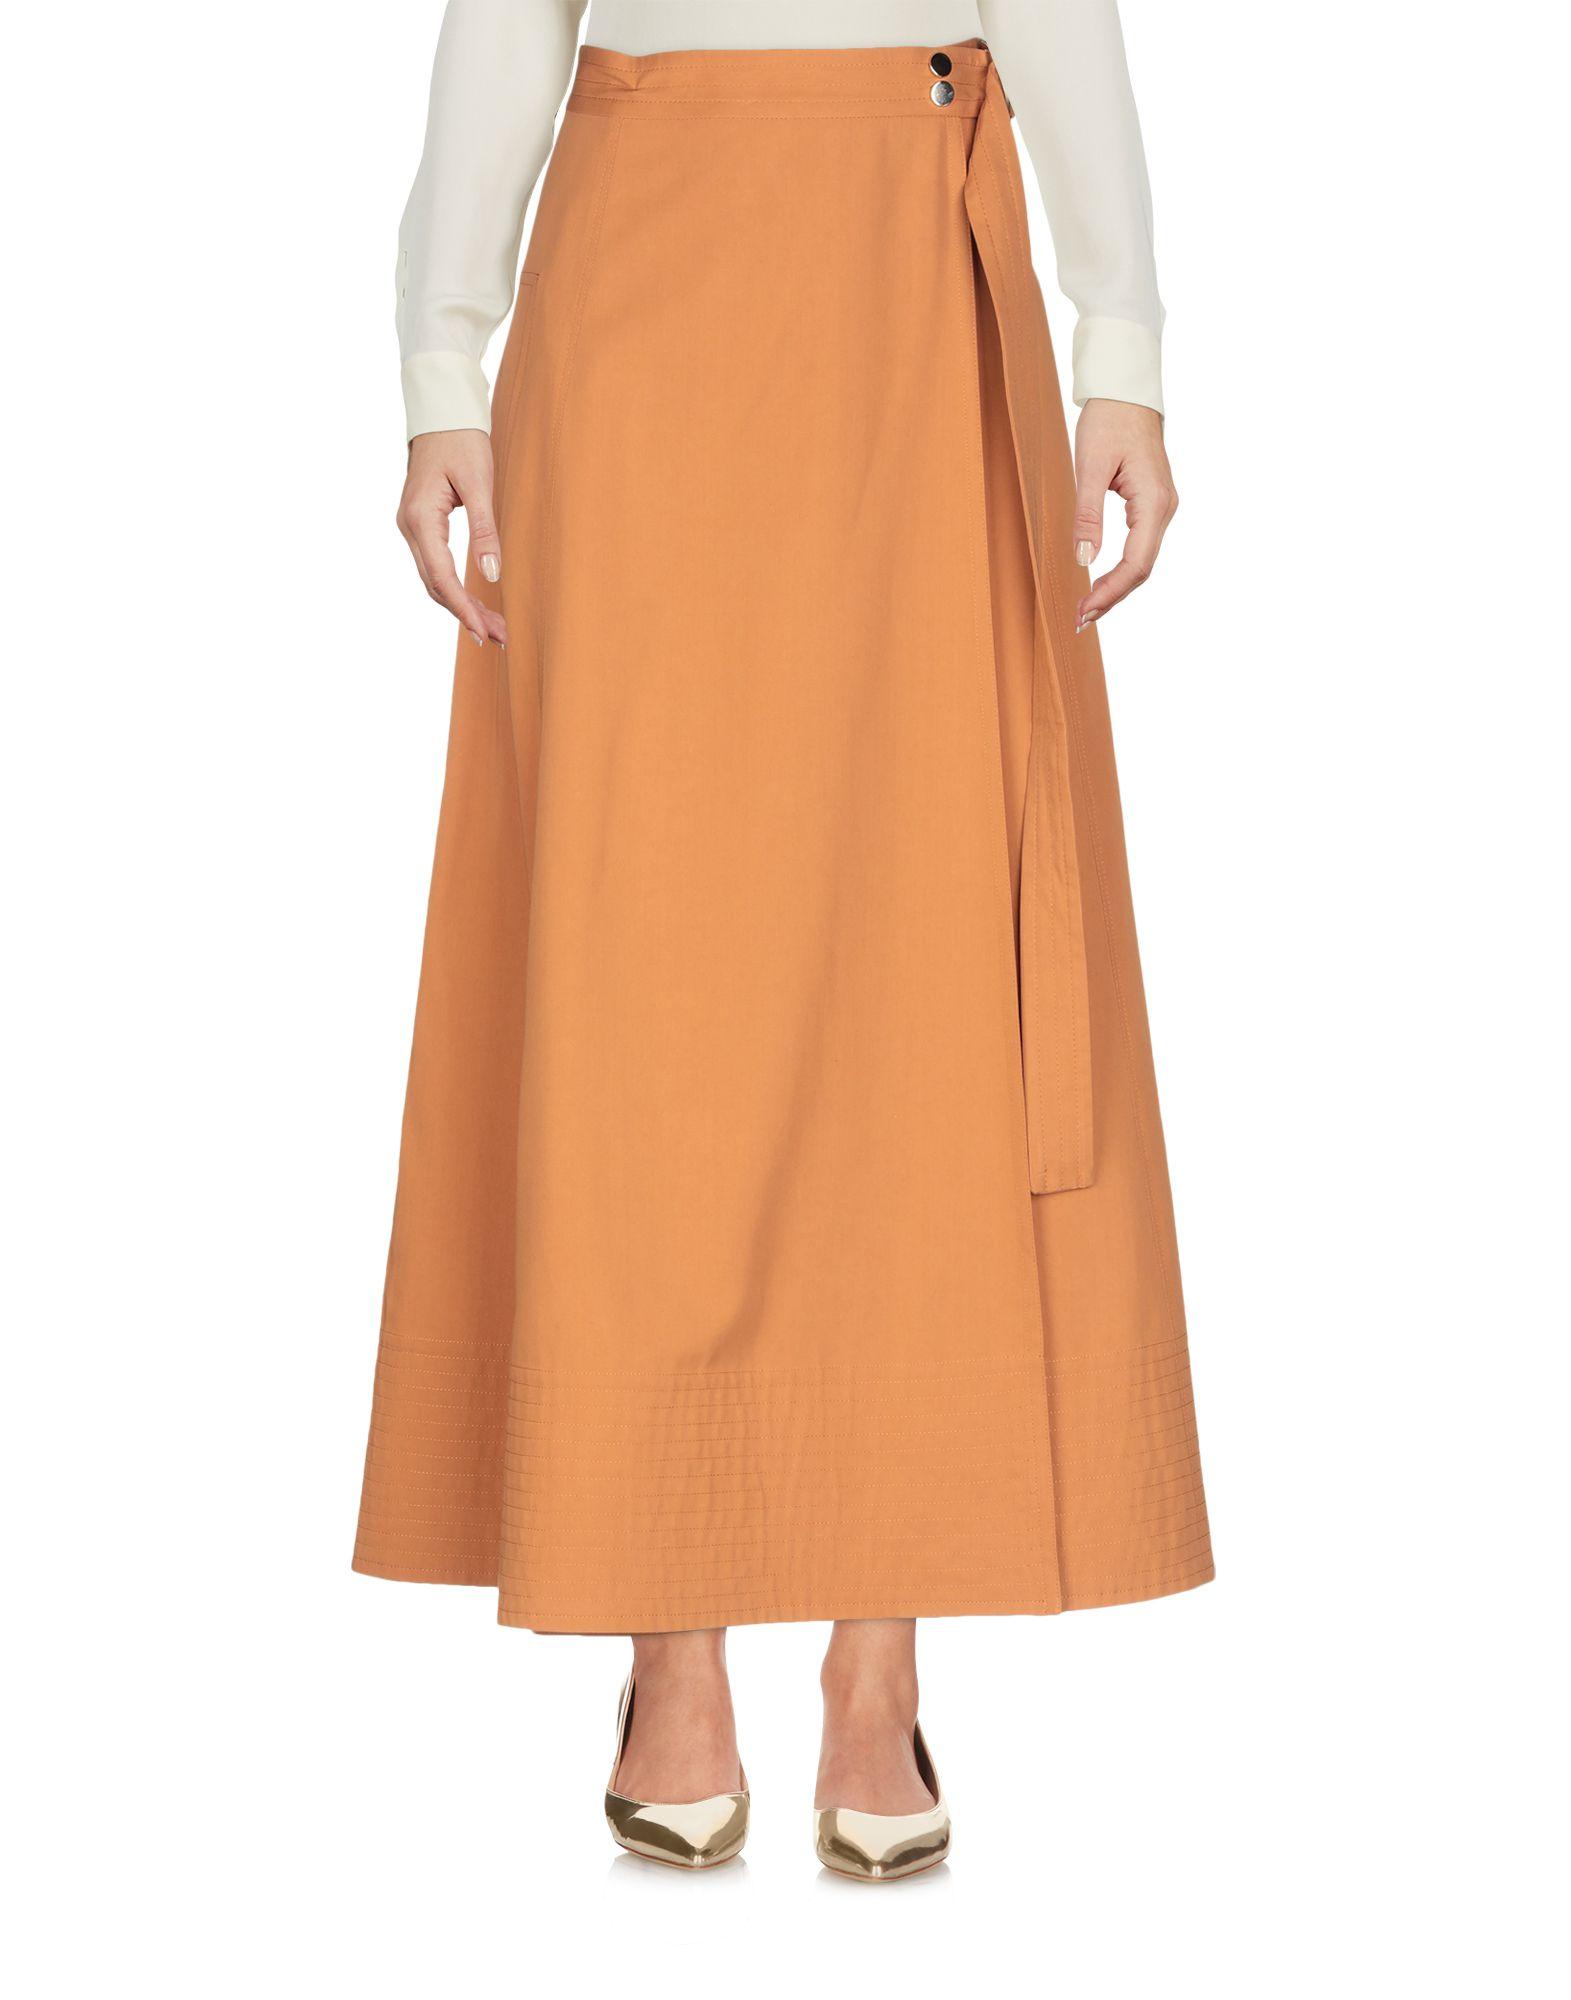 Vanessa Bruno Long Skirt in Orange - Lyst